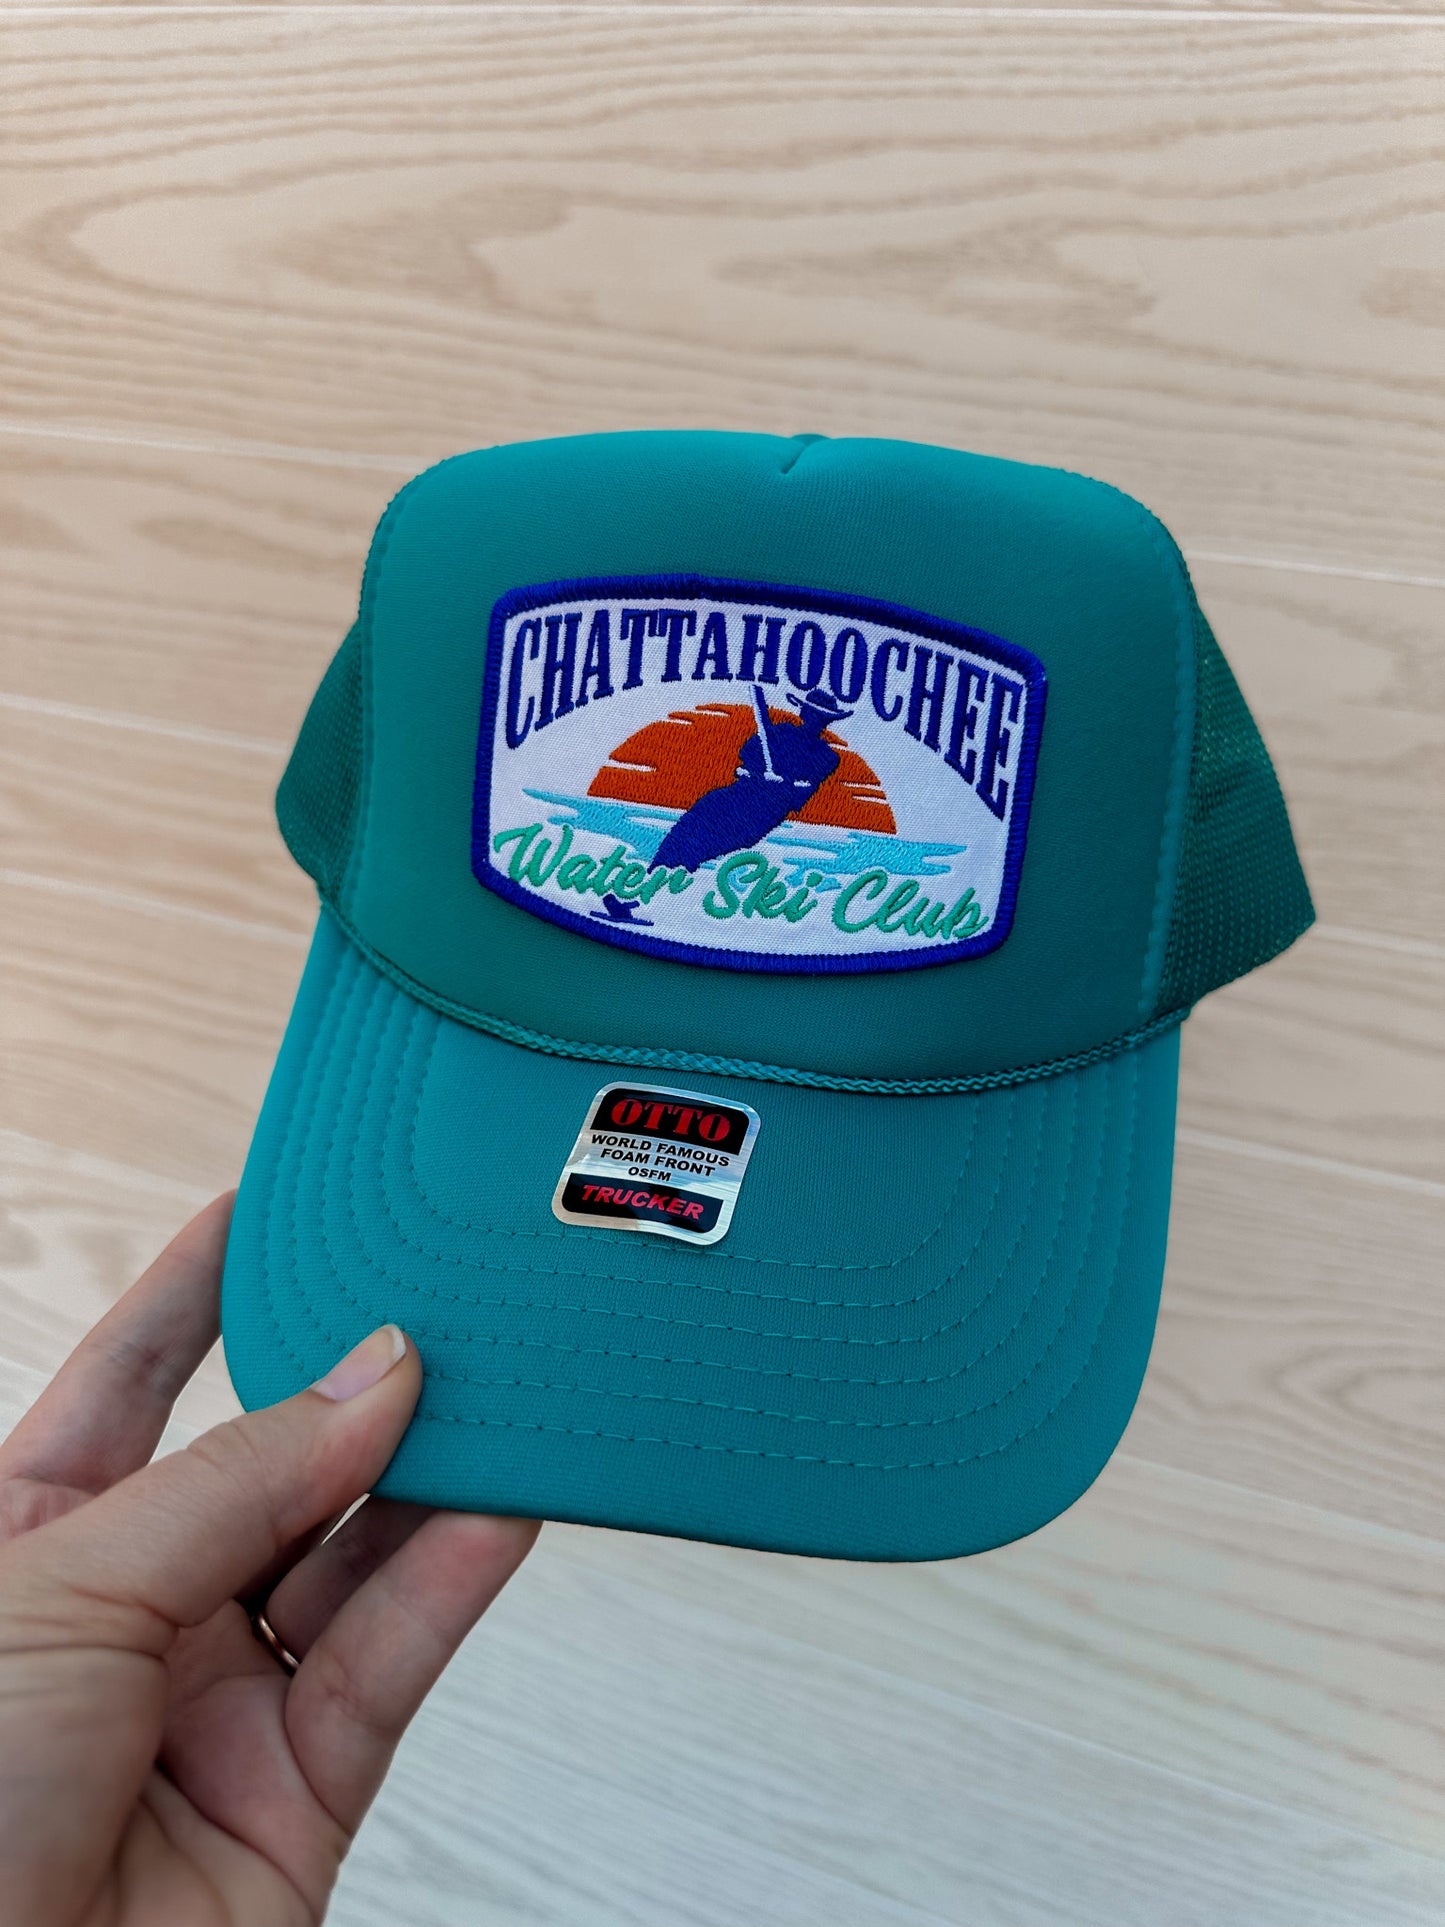 Chattahoochee Water Ski Club Trucker Hat